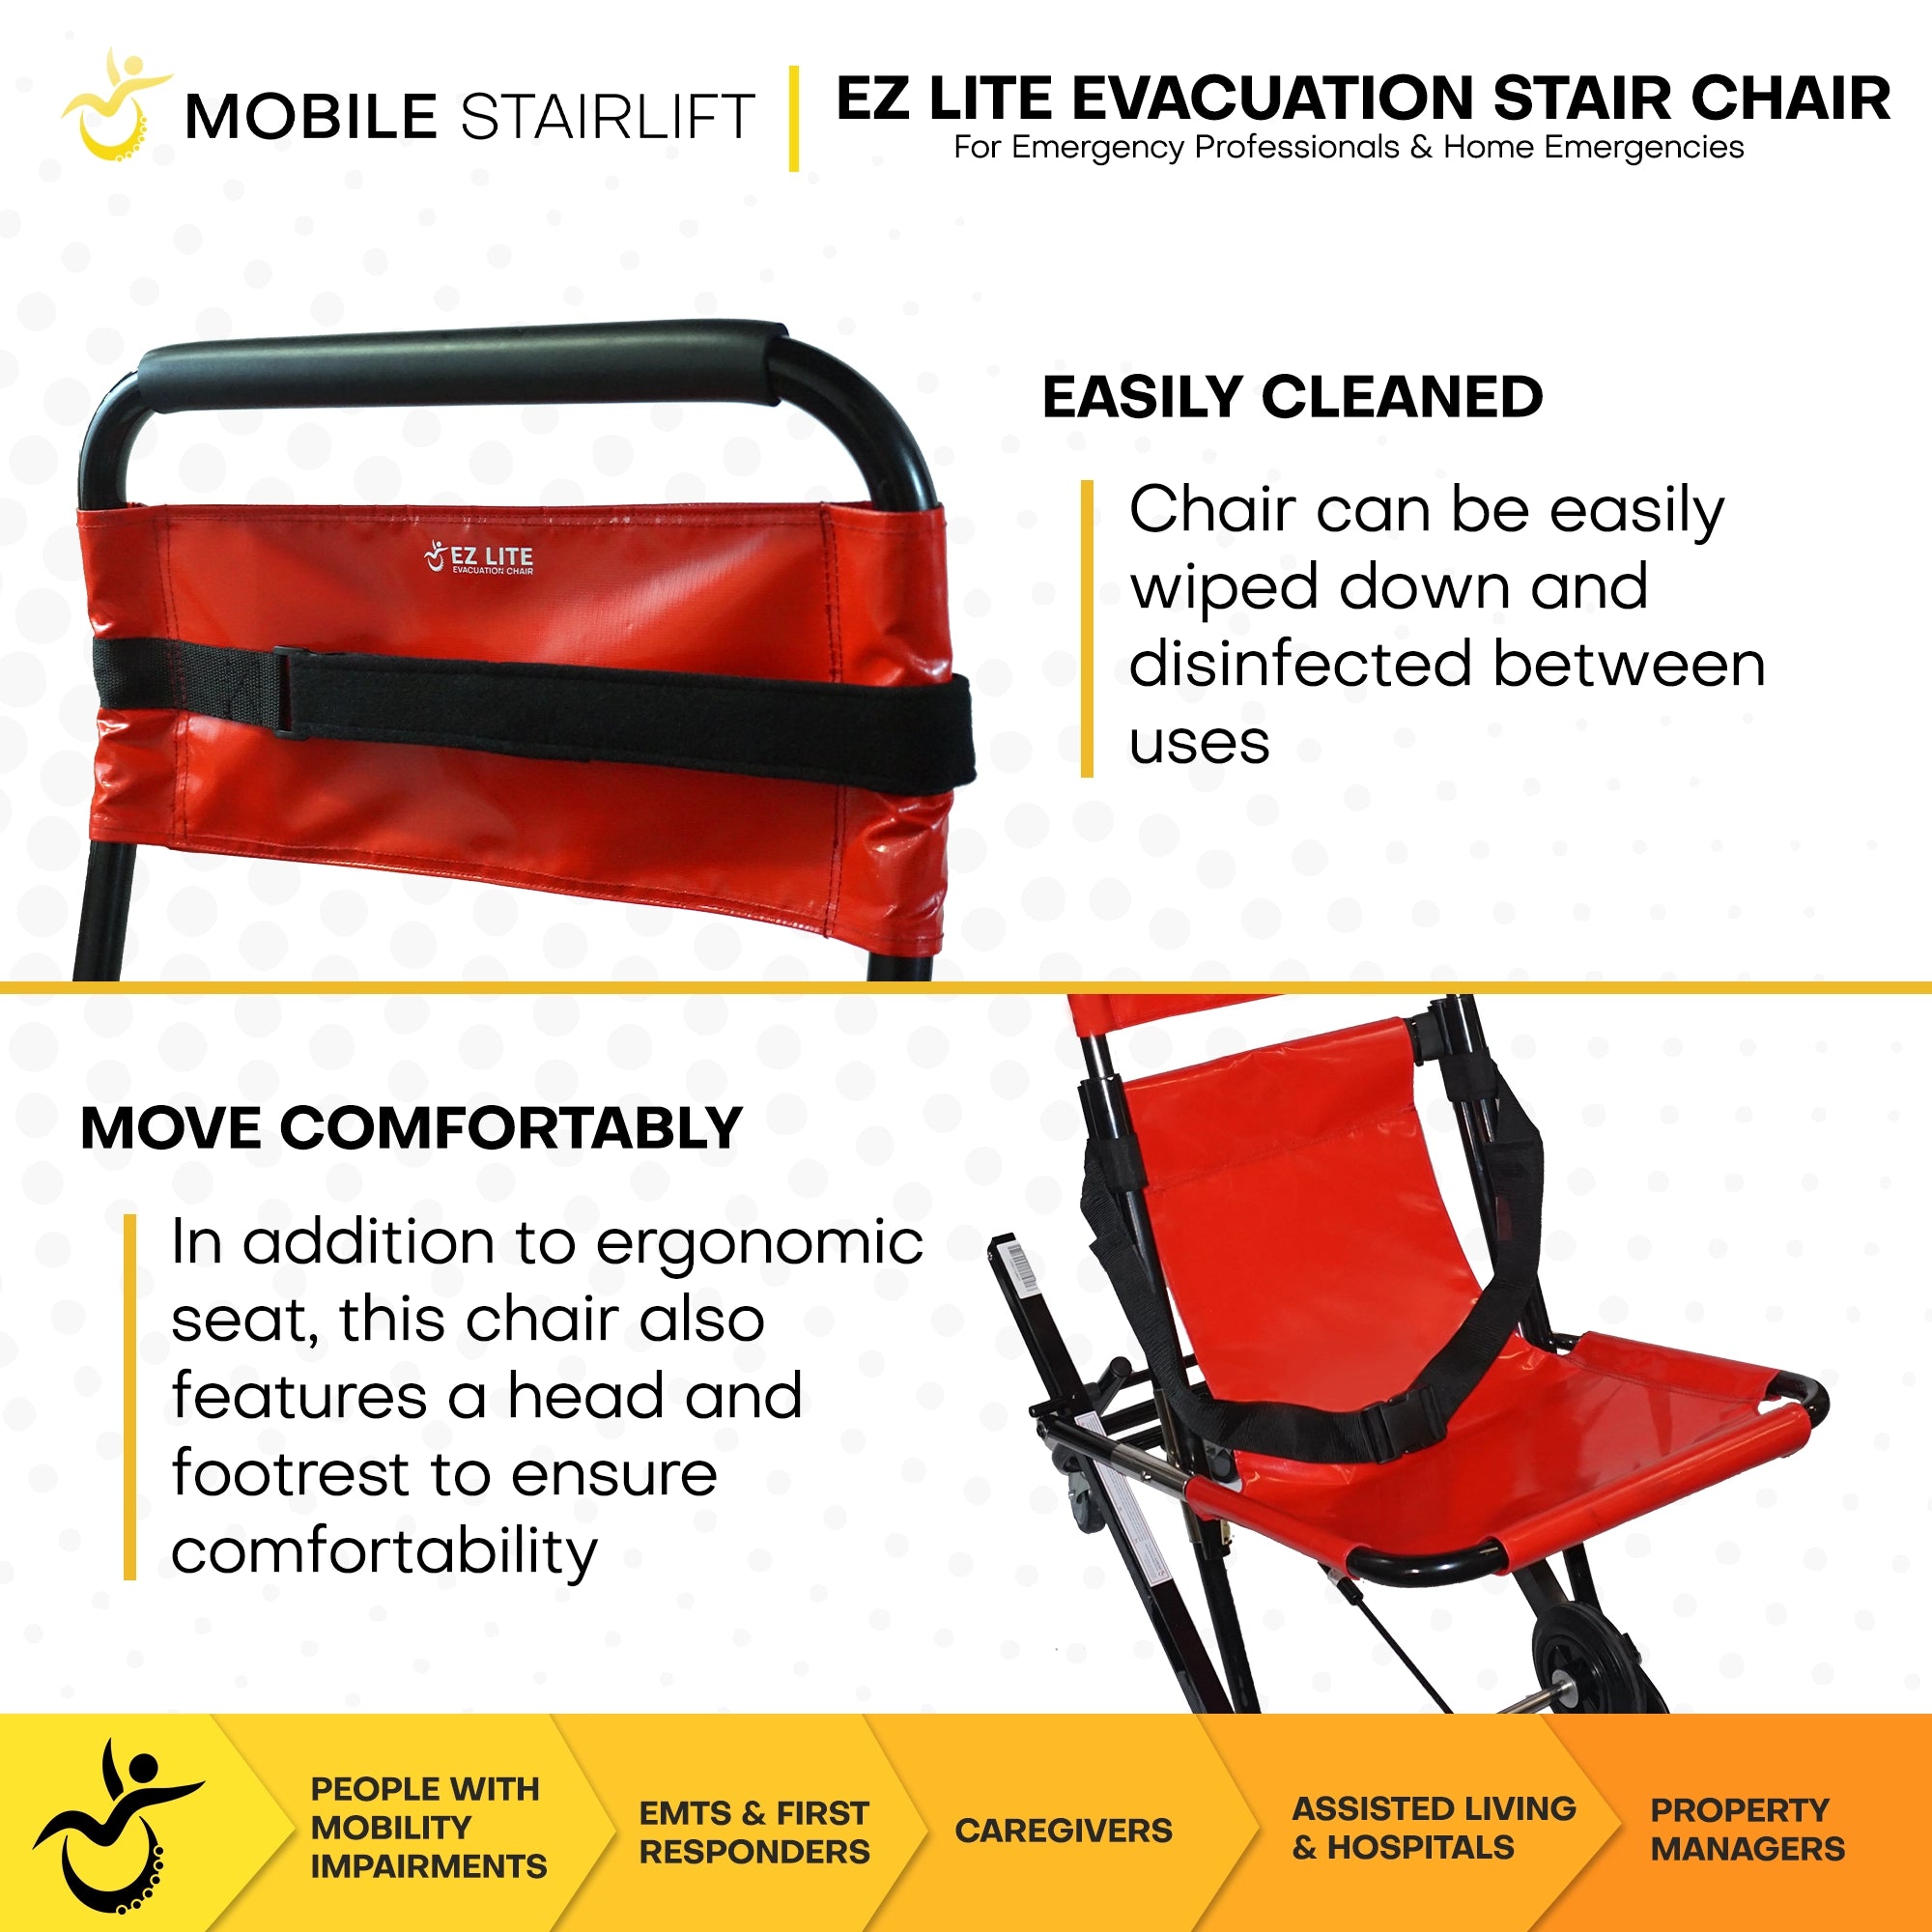 EZ LITE Evacuation Chair | Safe & Efficient & Mobile Stairlift